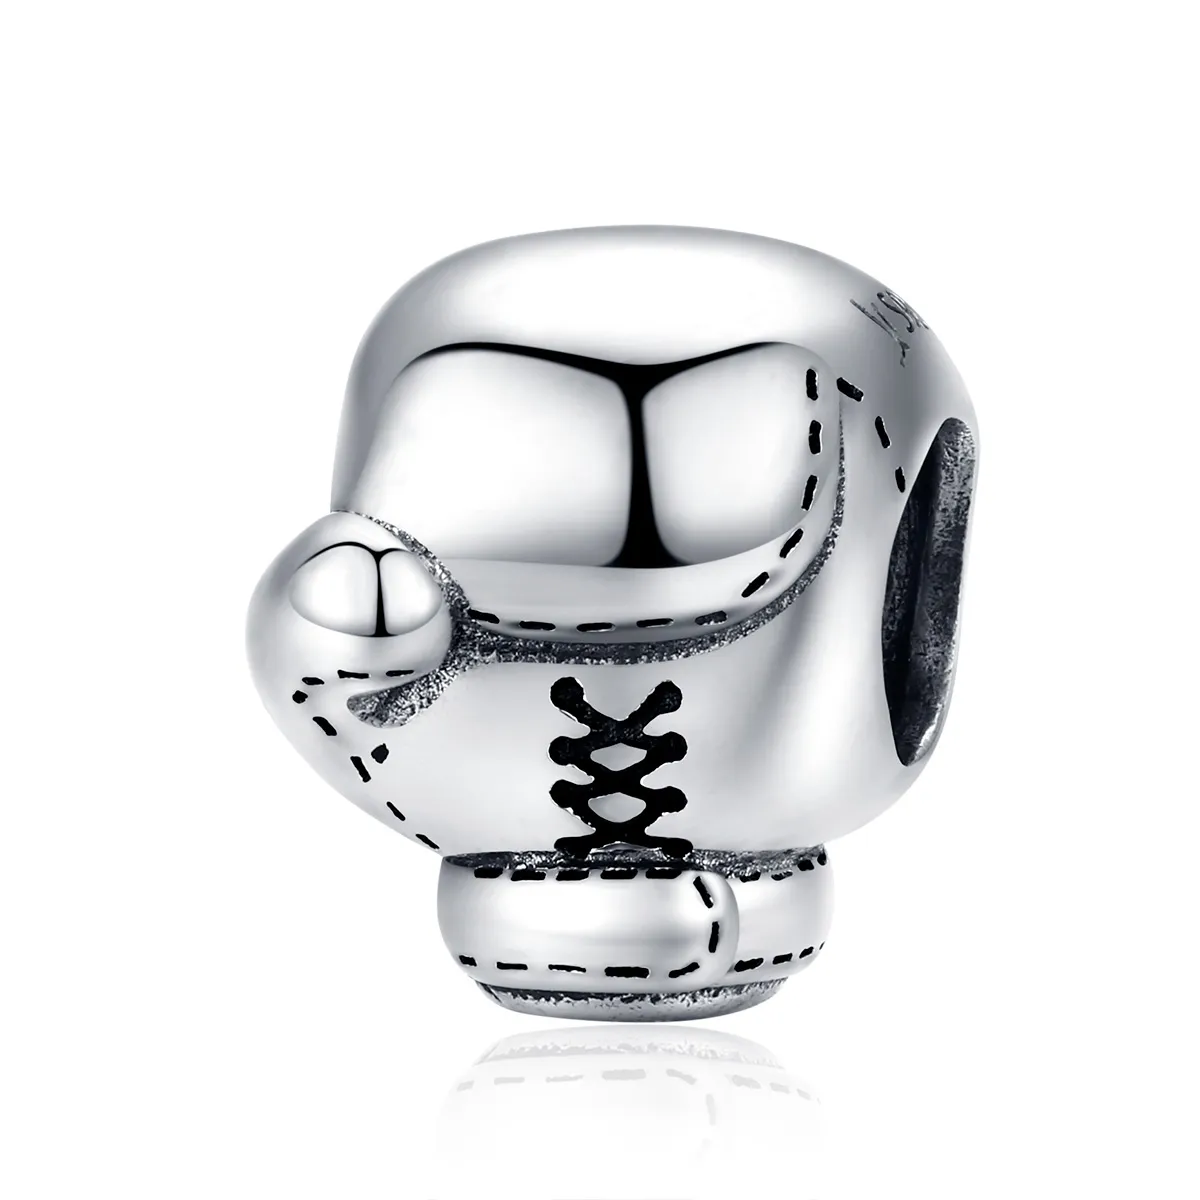 Talisman Tip Pandora Manusa de box din argint - SCC1325